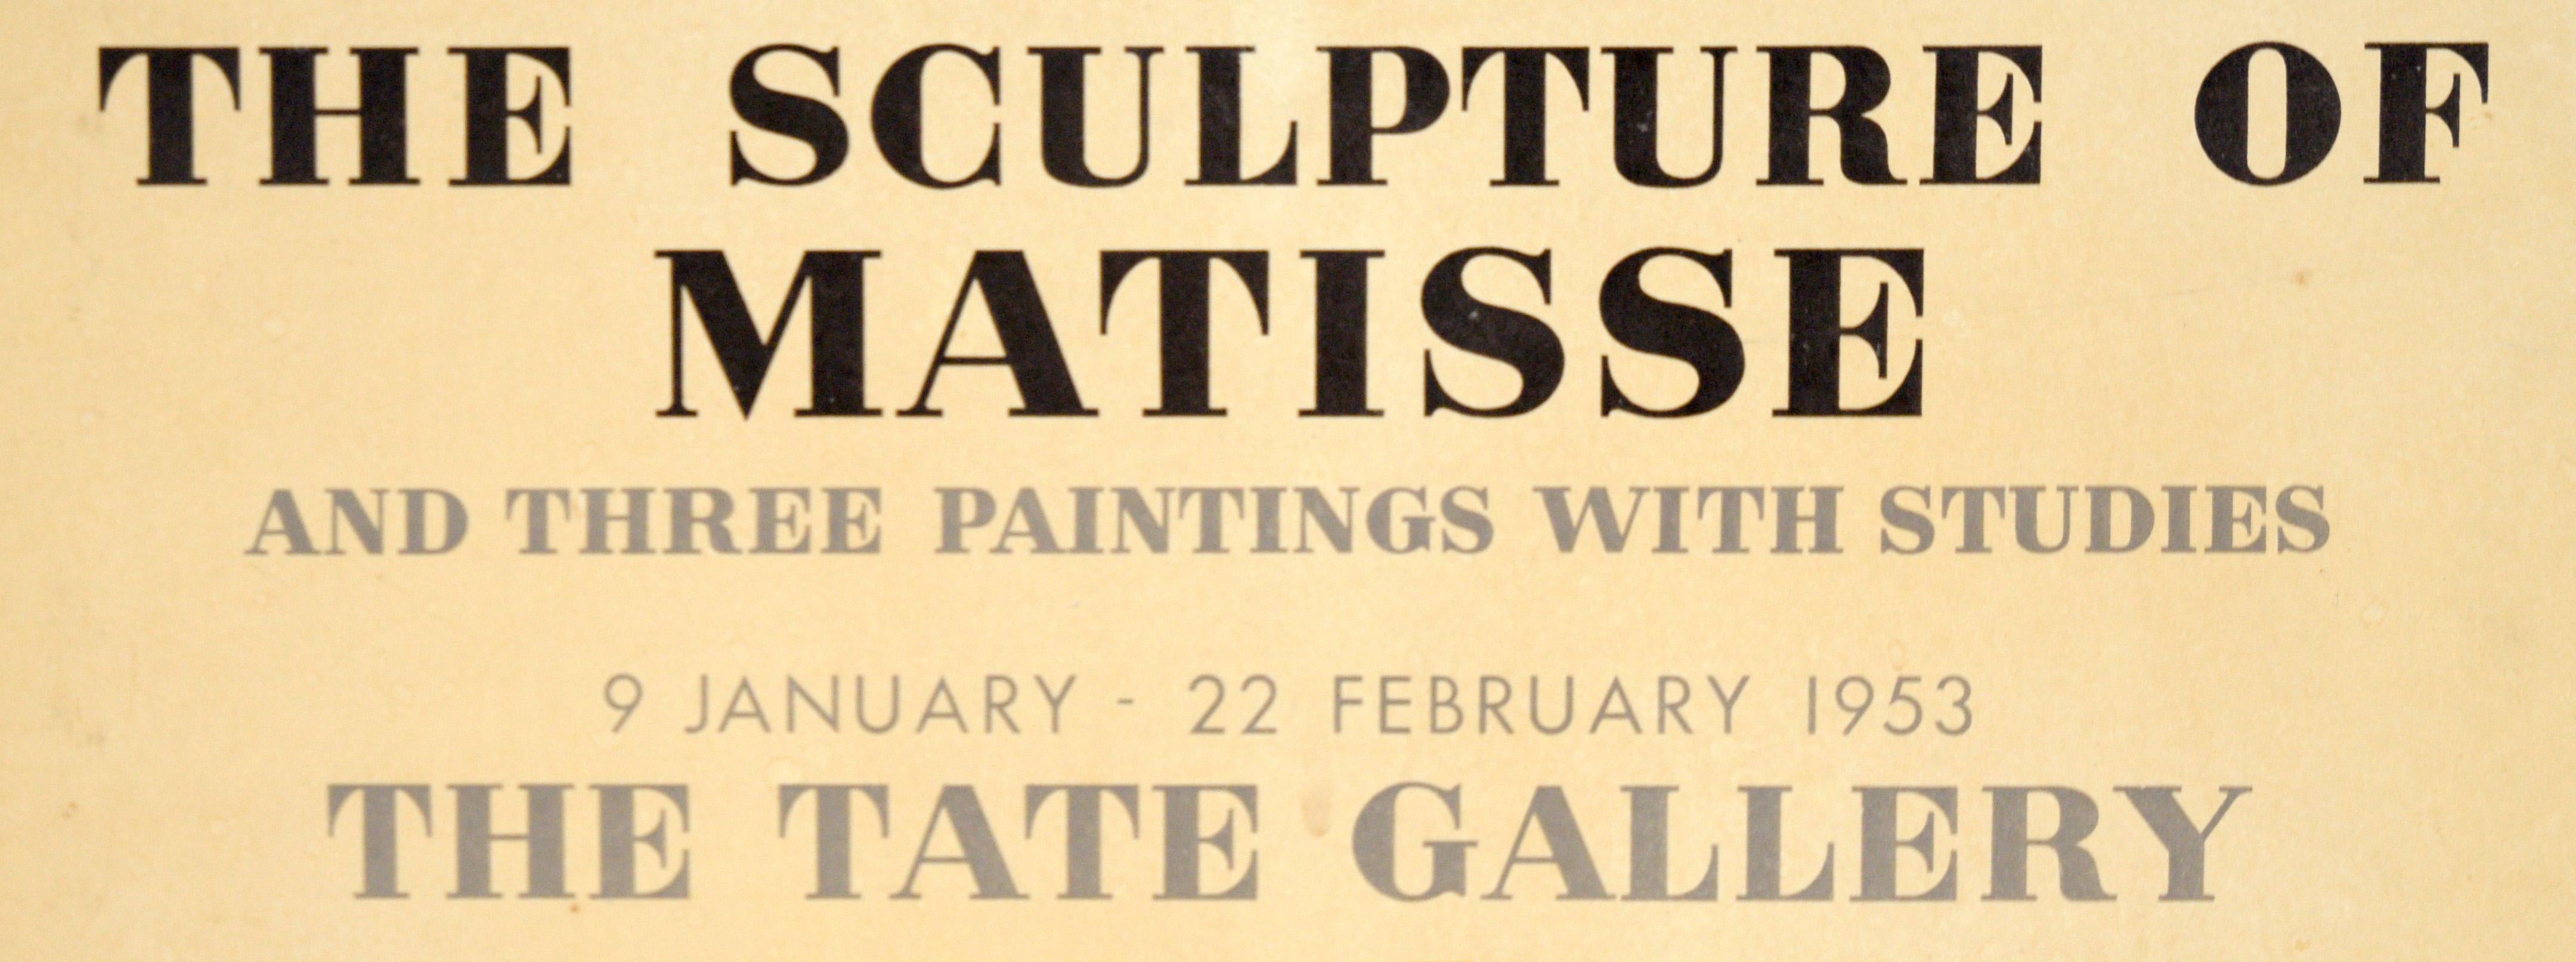 Original Vintage Henri Matisse Exhibition Poster, The Tate Gallery, 1953

